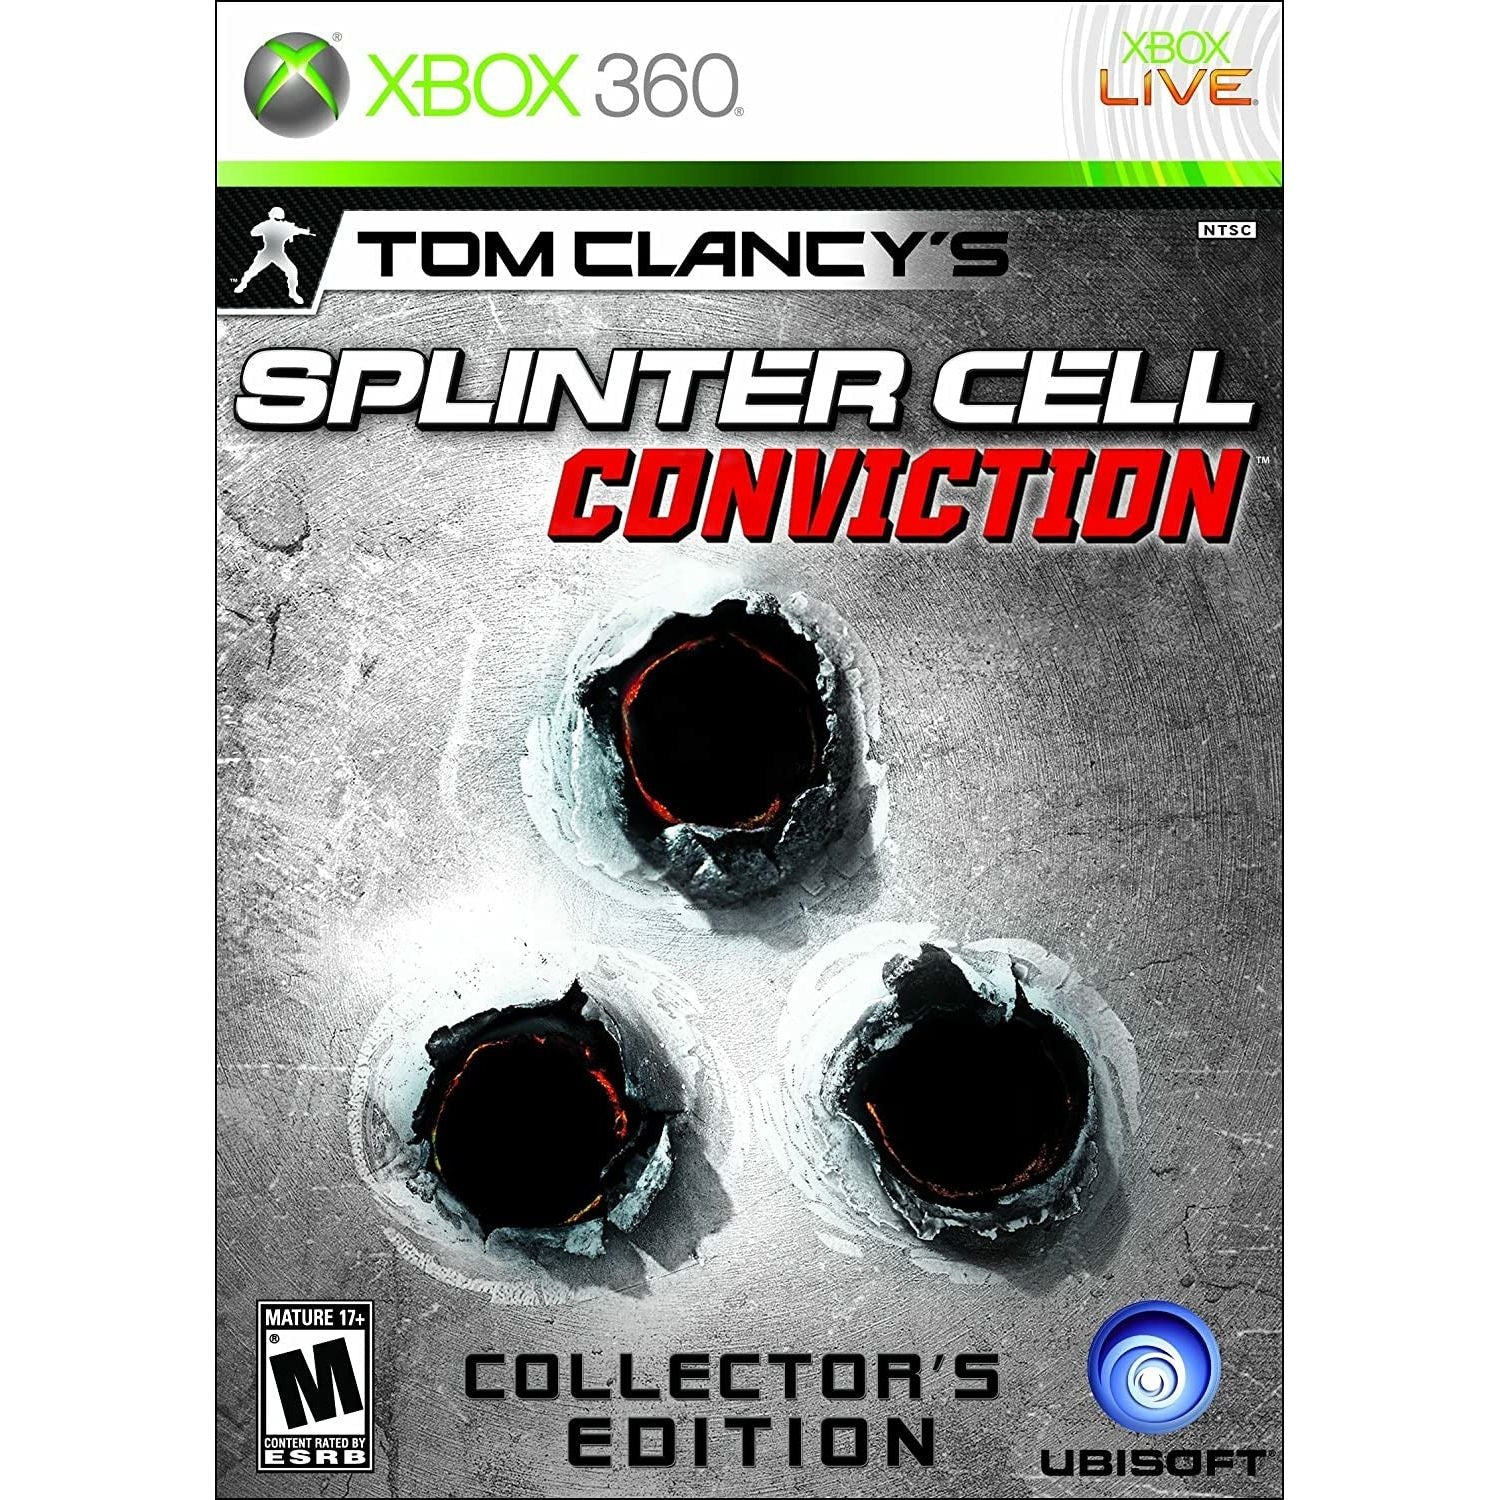 XBOX 360 - Tom Clancy's Splinter Cell Conviction Collector's Edition (No Comic)